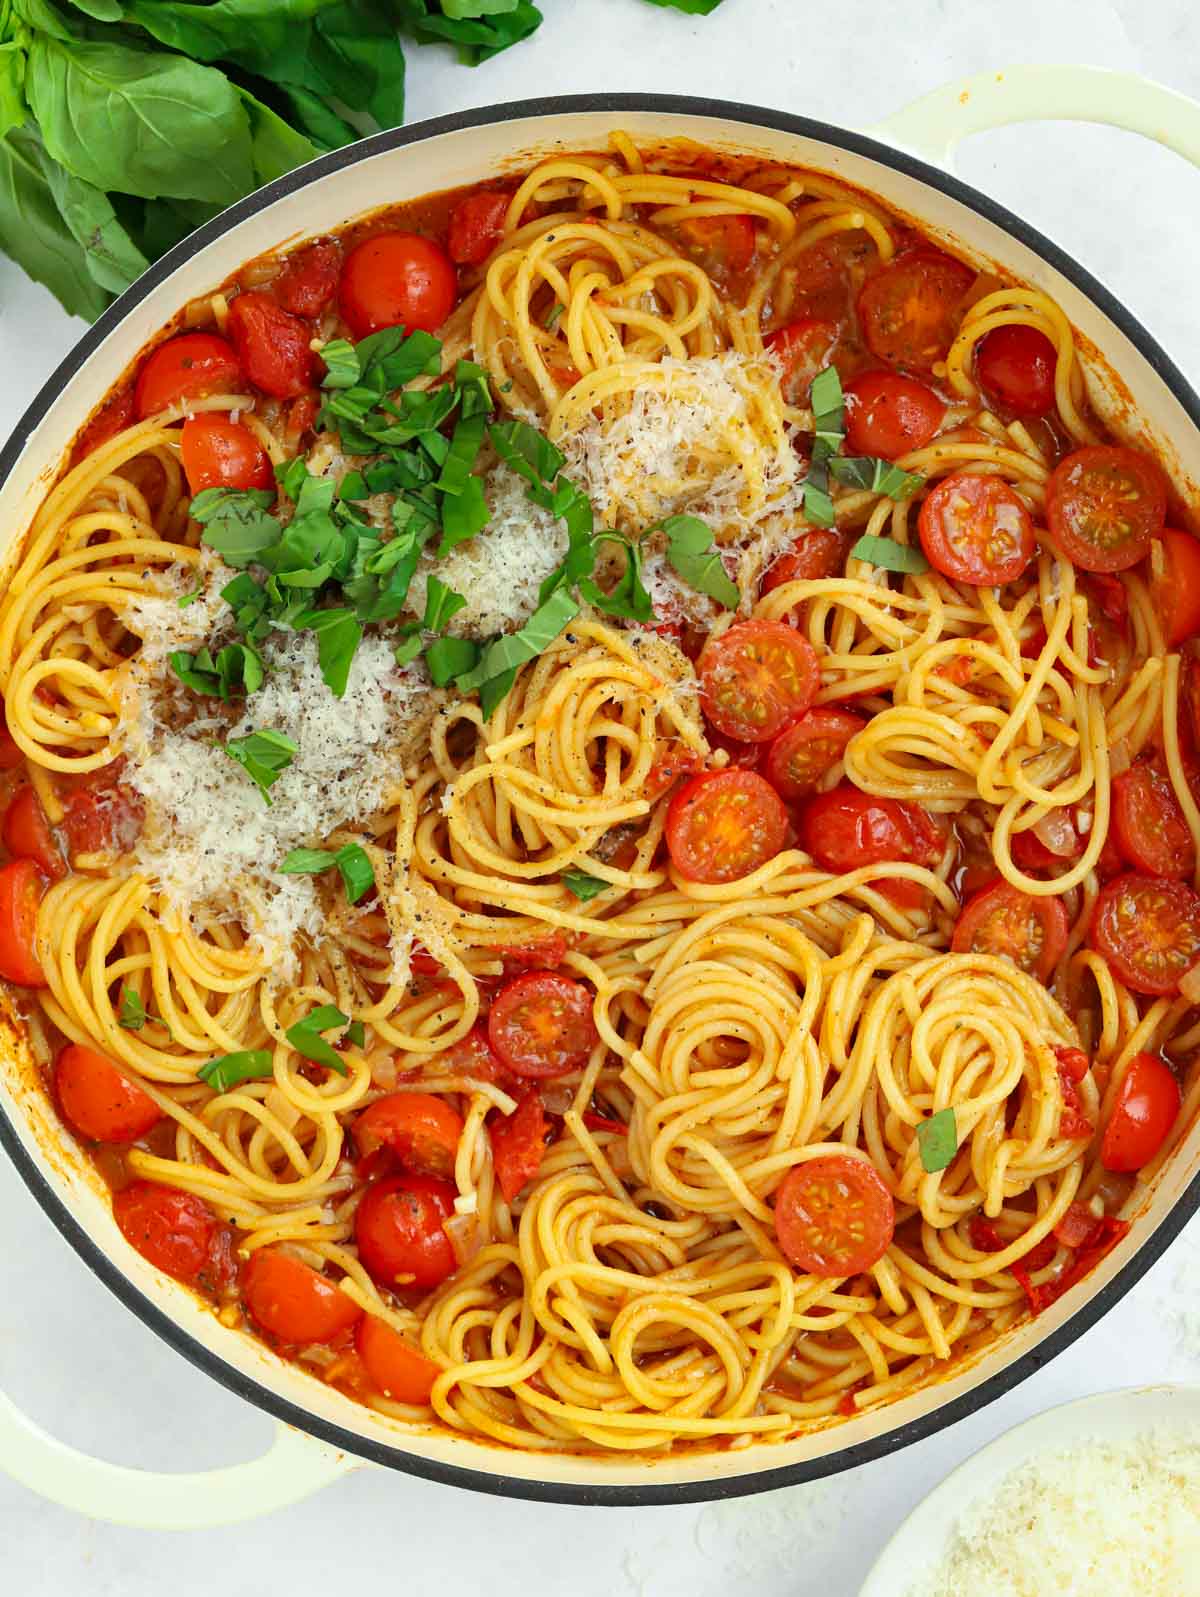 https://www.tamingtwins.com/wp-content/uploads/2022/06/tomato-pasta-2.jpg